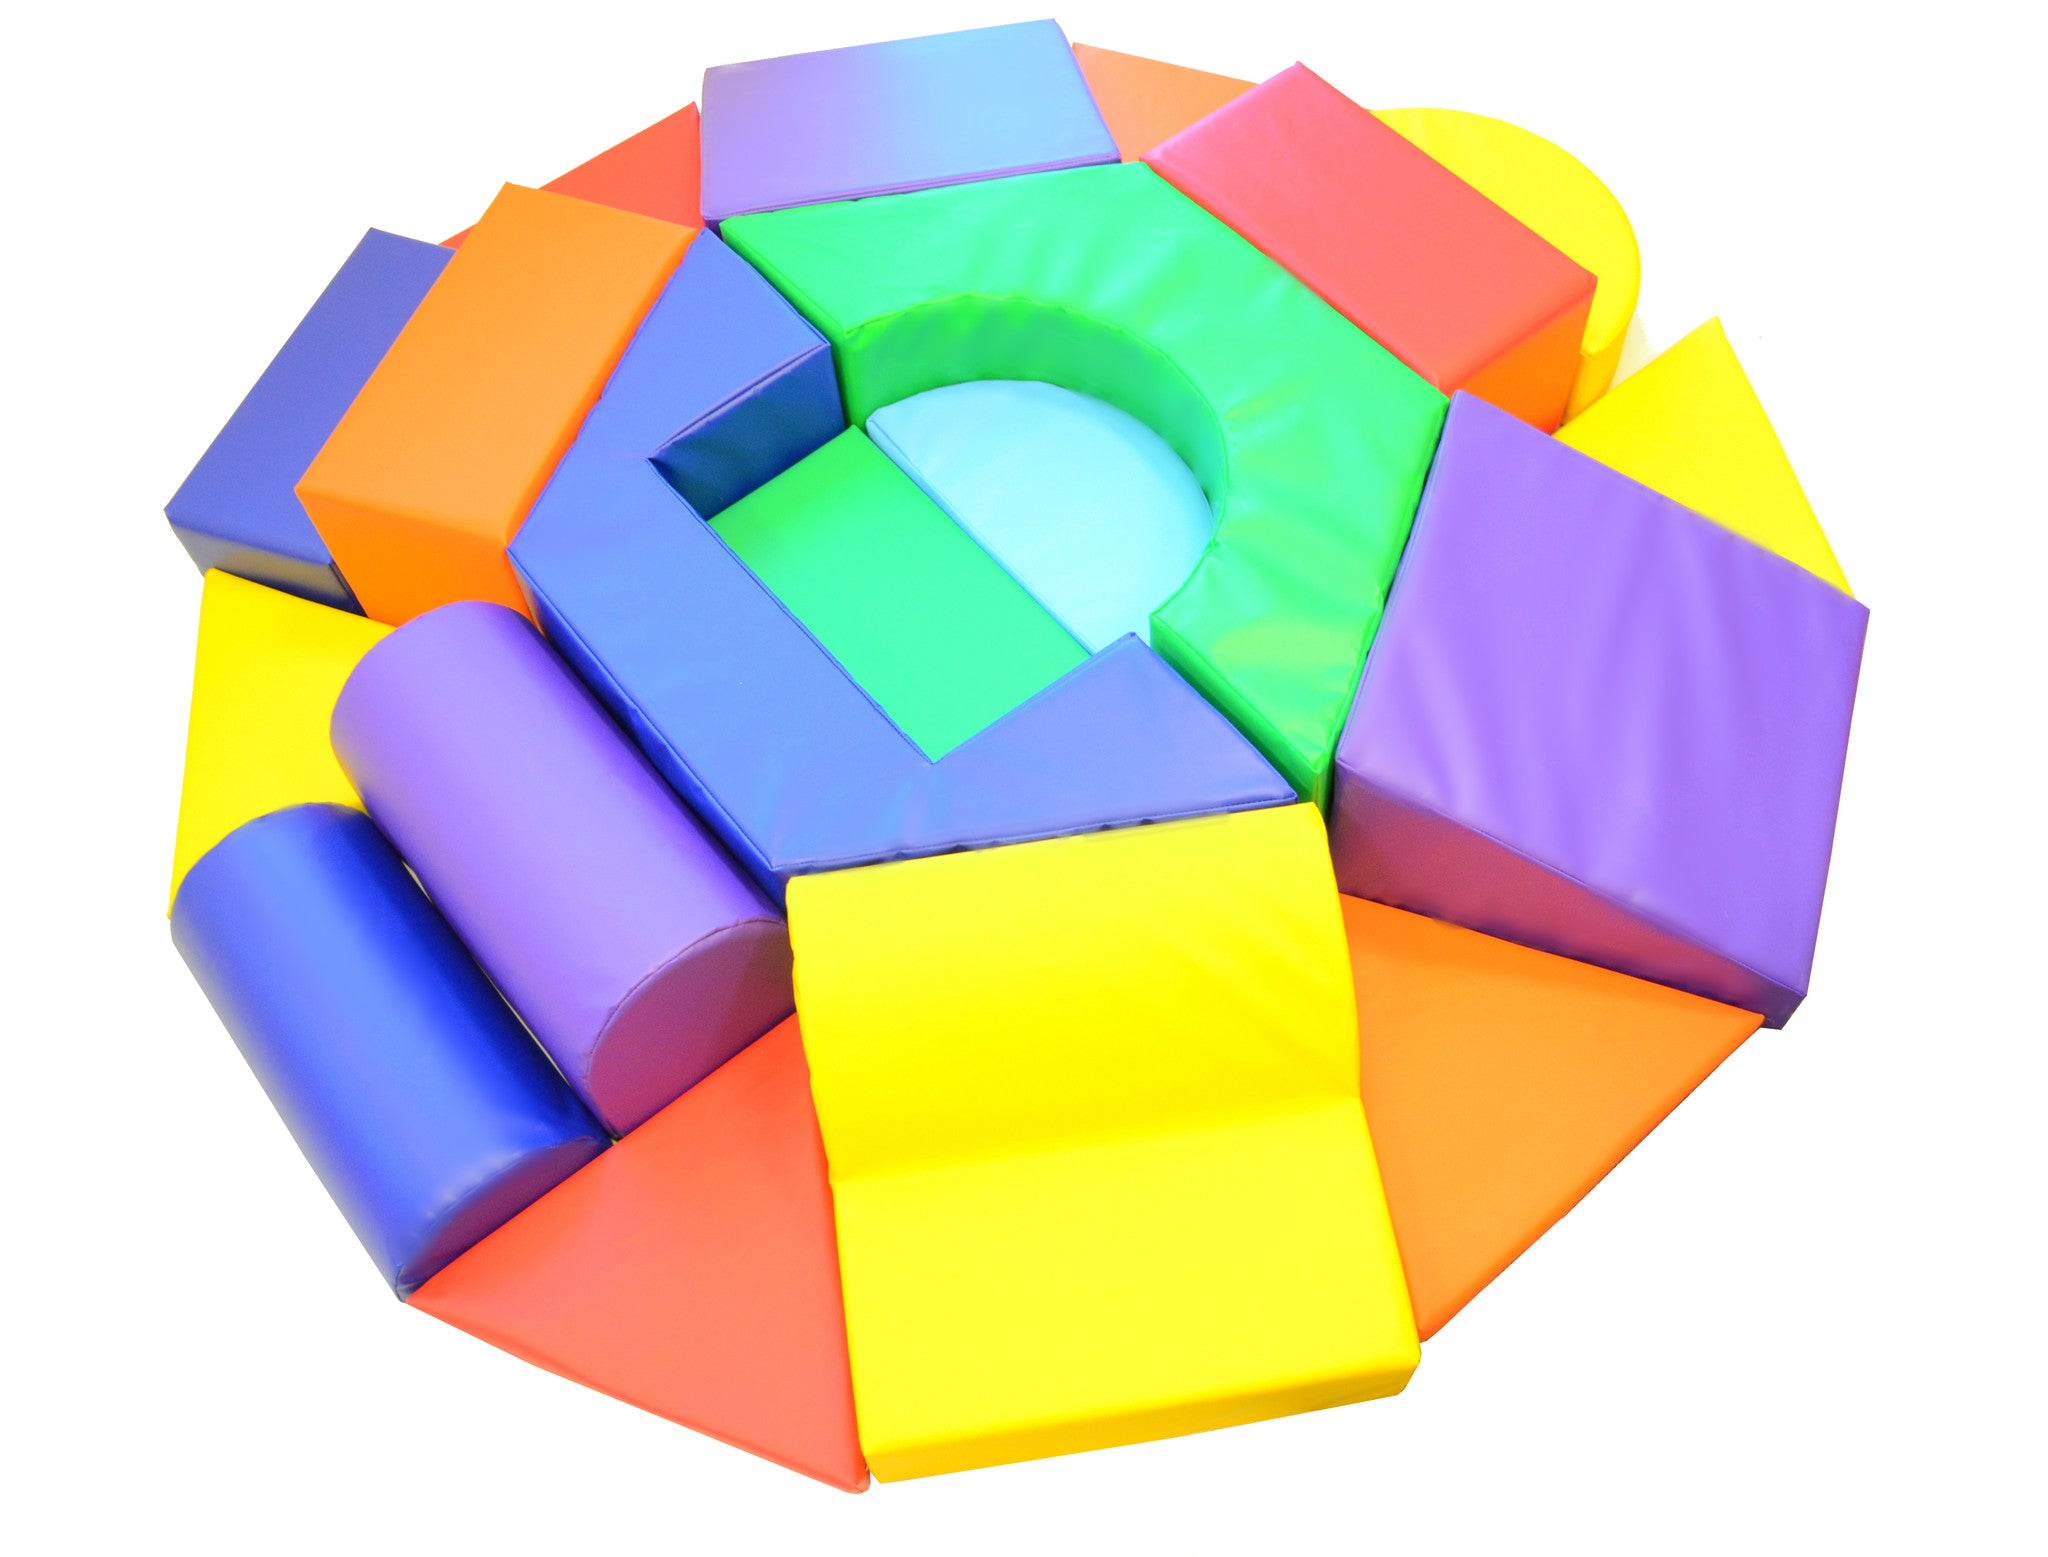 Hexagon Toddler Soft Play Climber